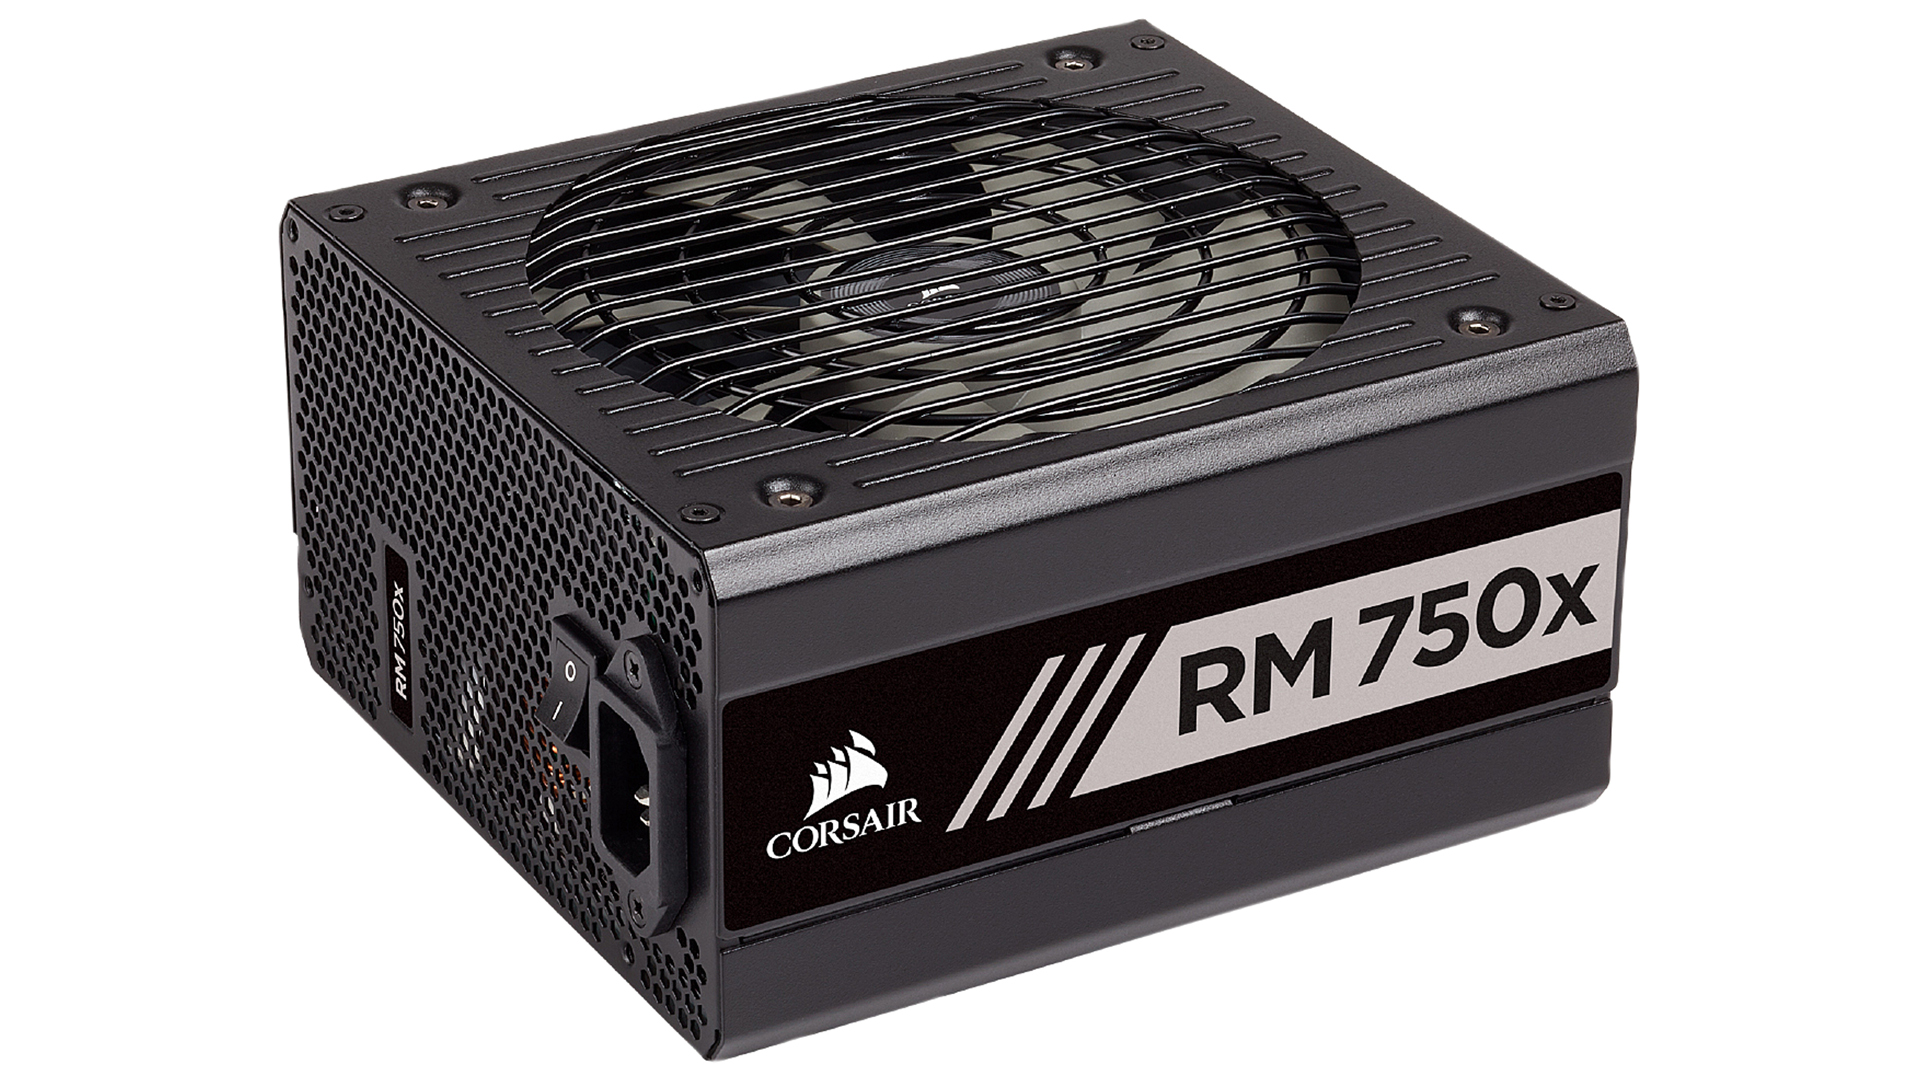 The Corsair RM750x power supply